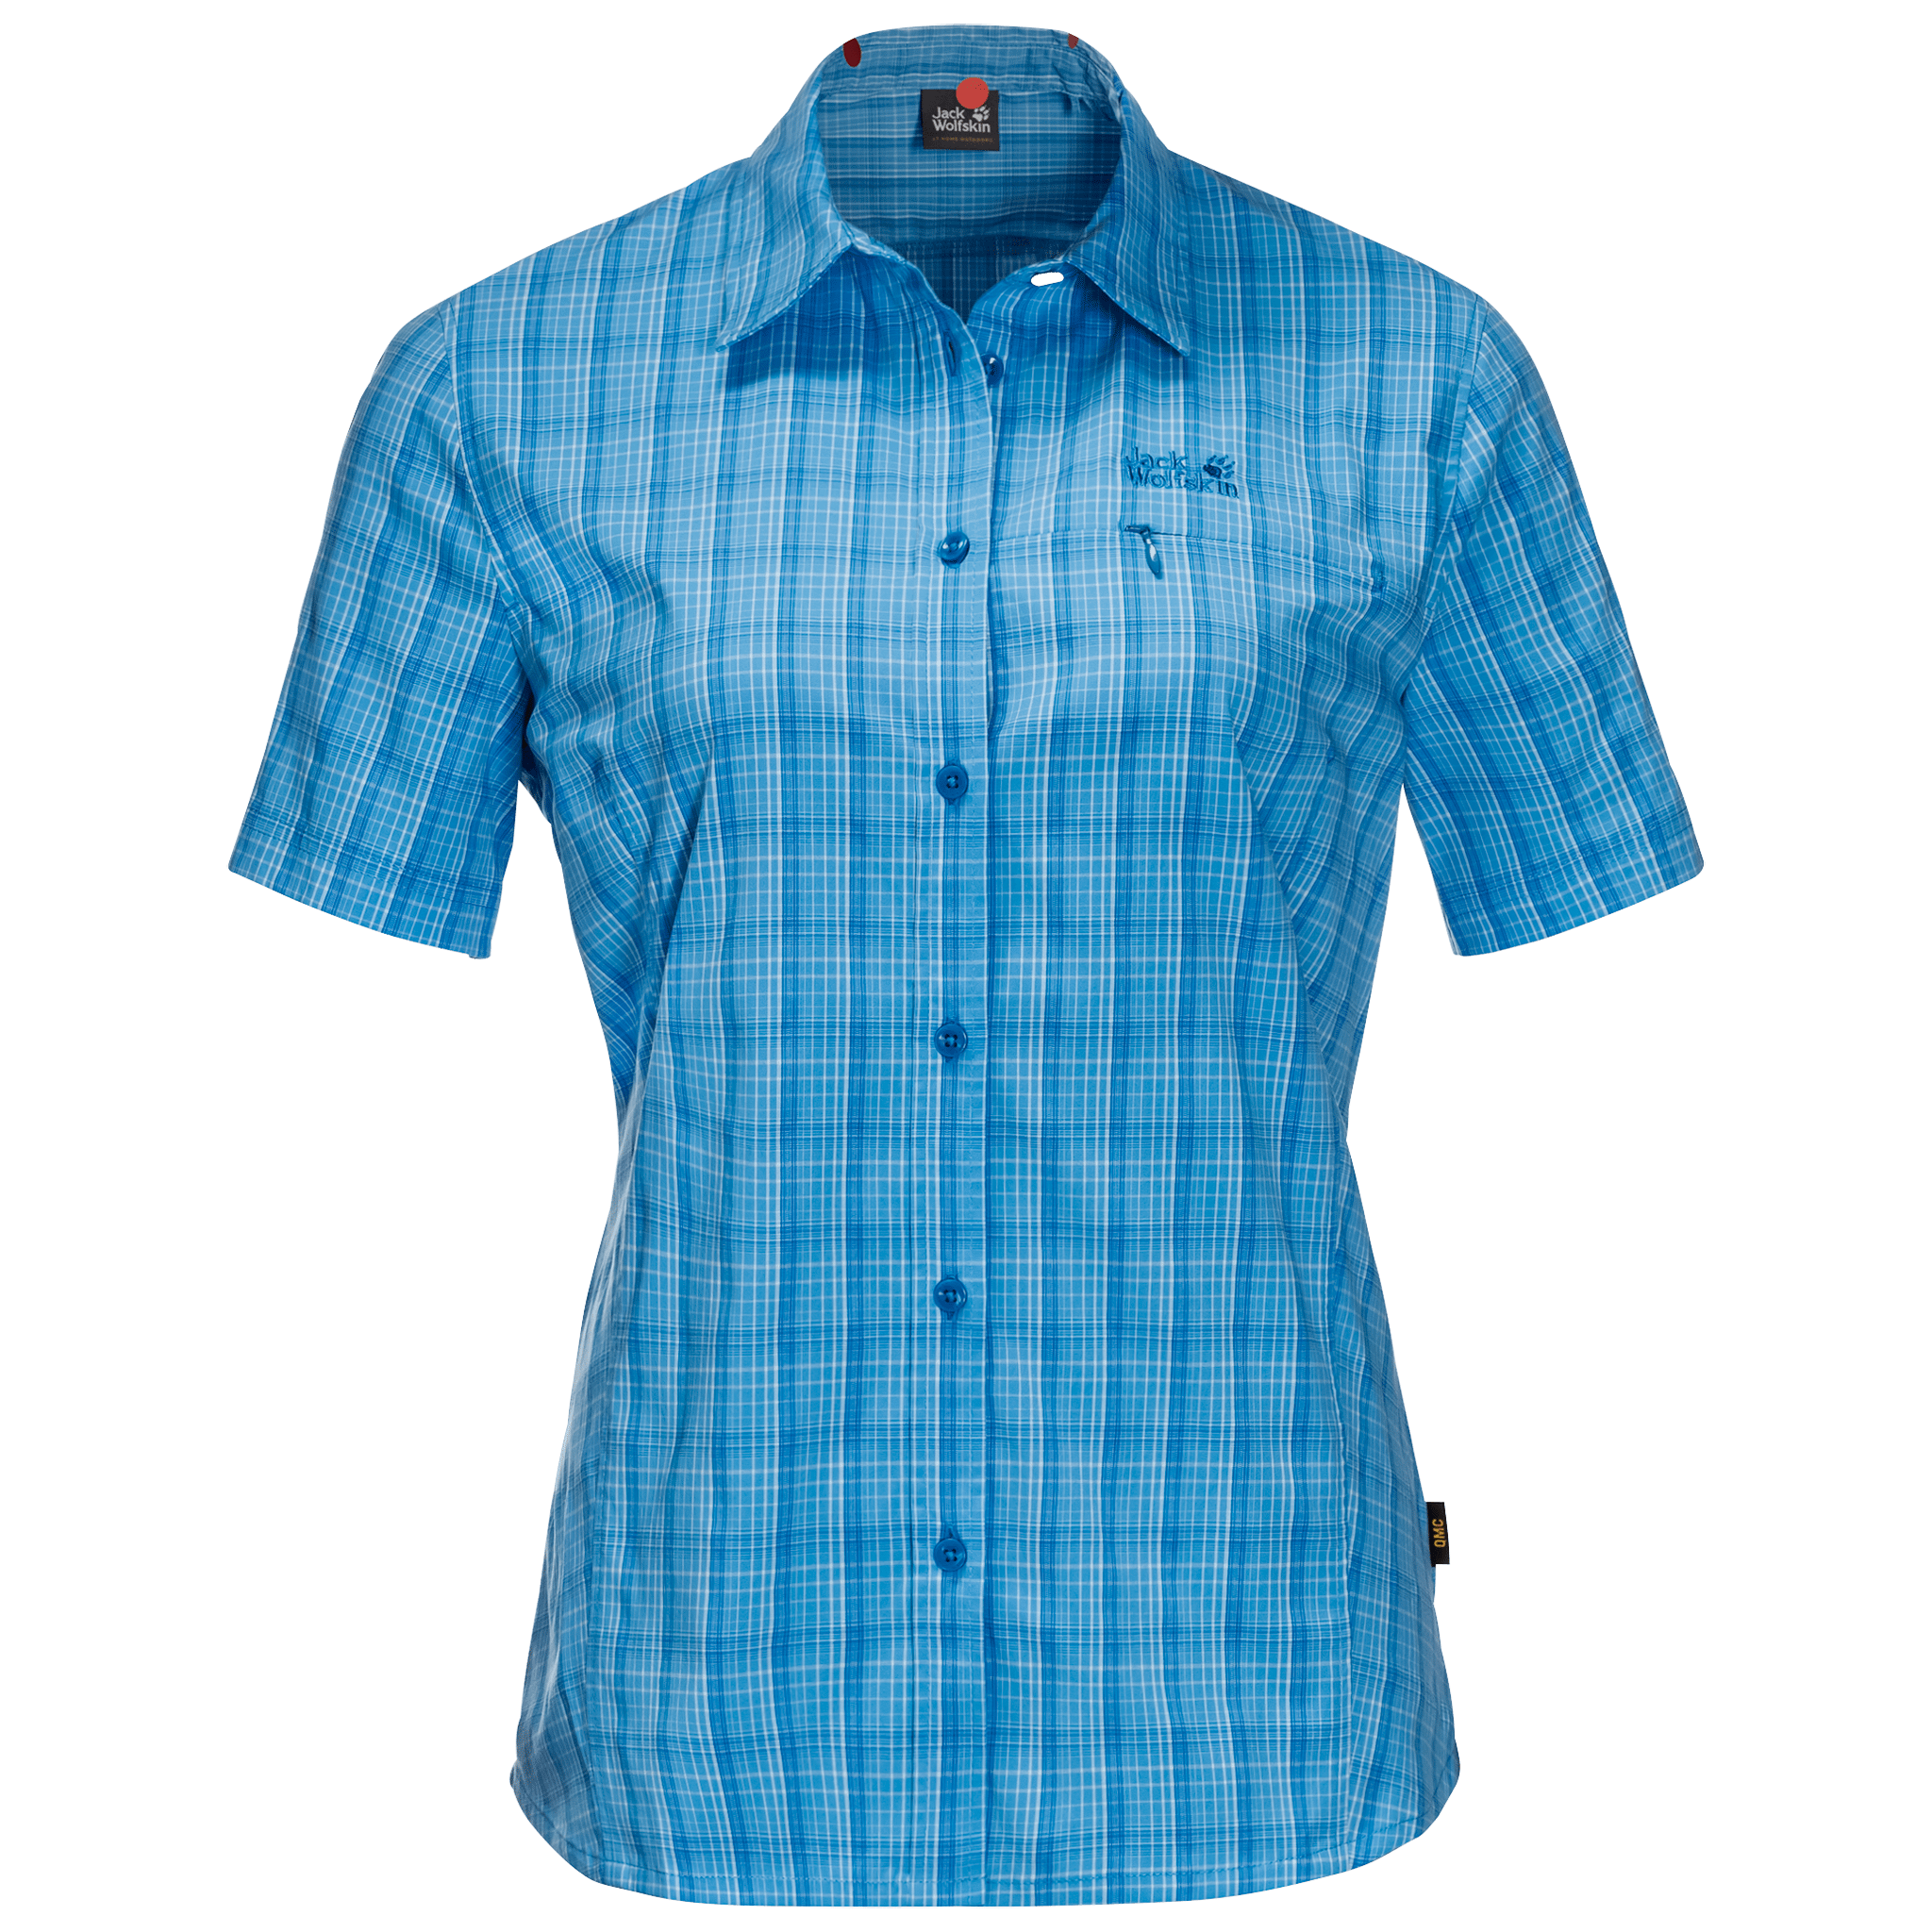 Brilliant Blue Checks Short-Sleeved Uv Stetch Buttondown